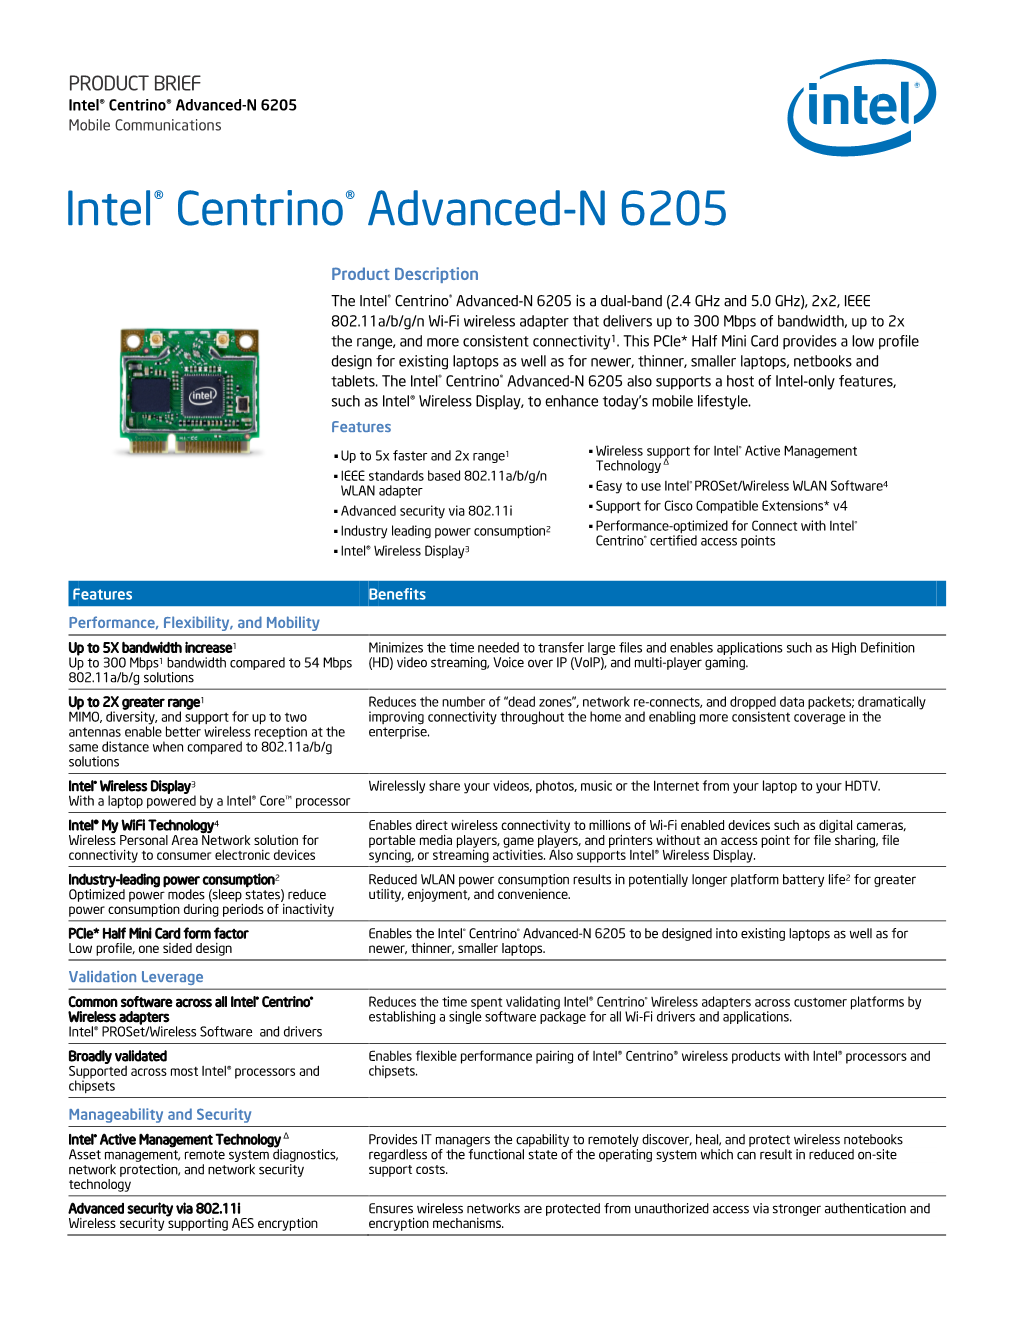 Intel Centrino Advanced-N 6205 Product Brief